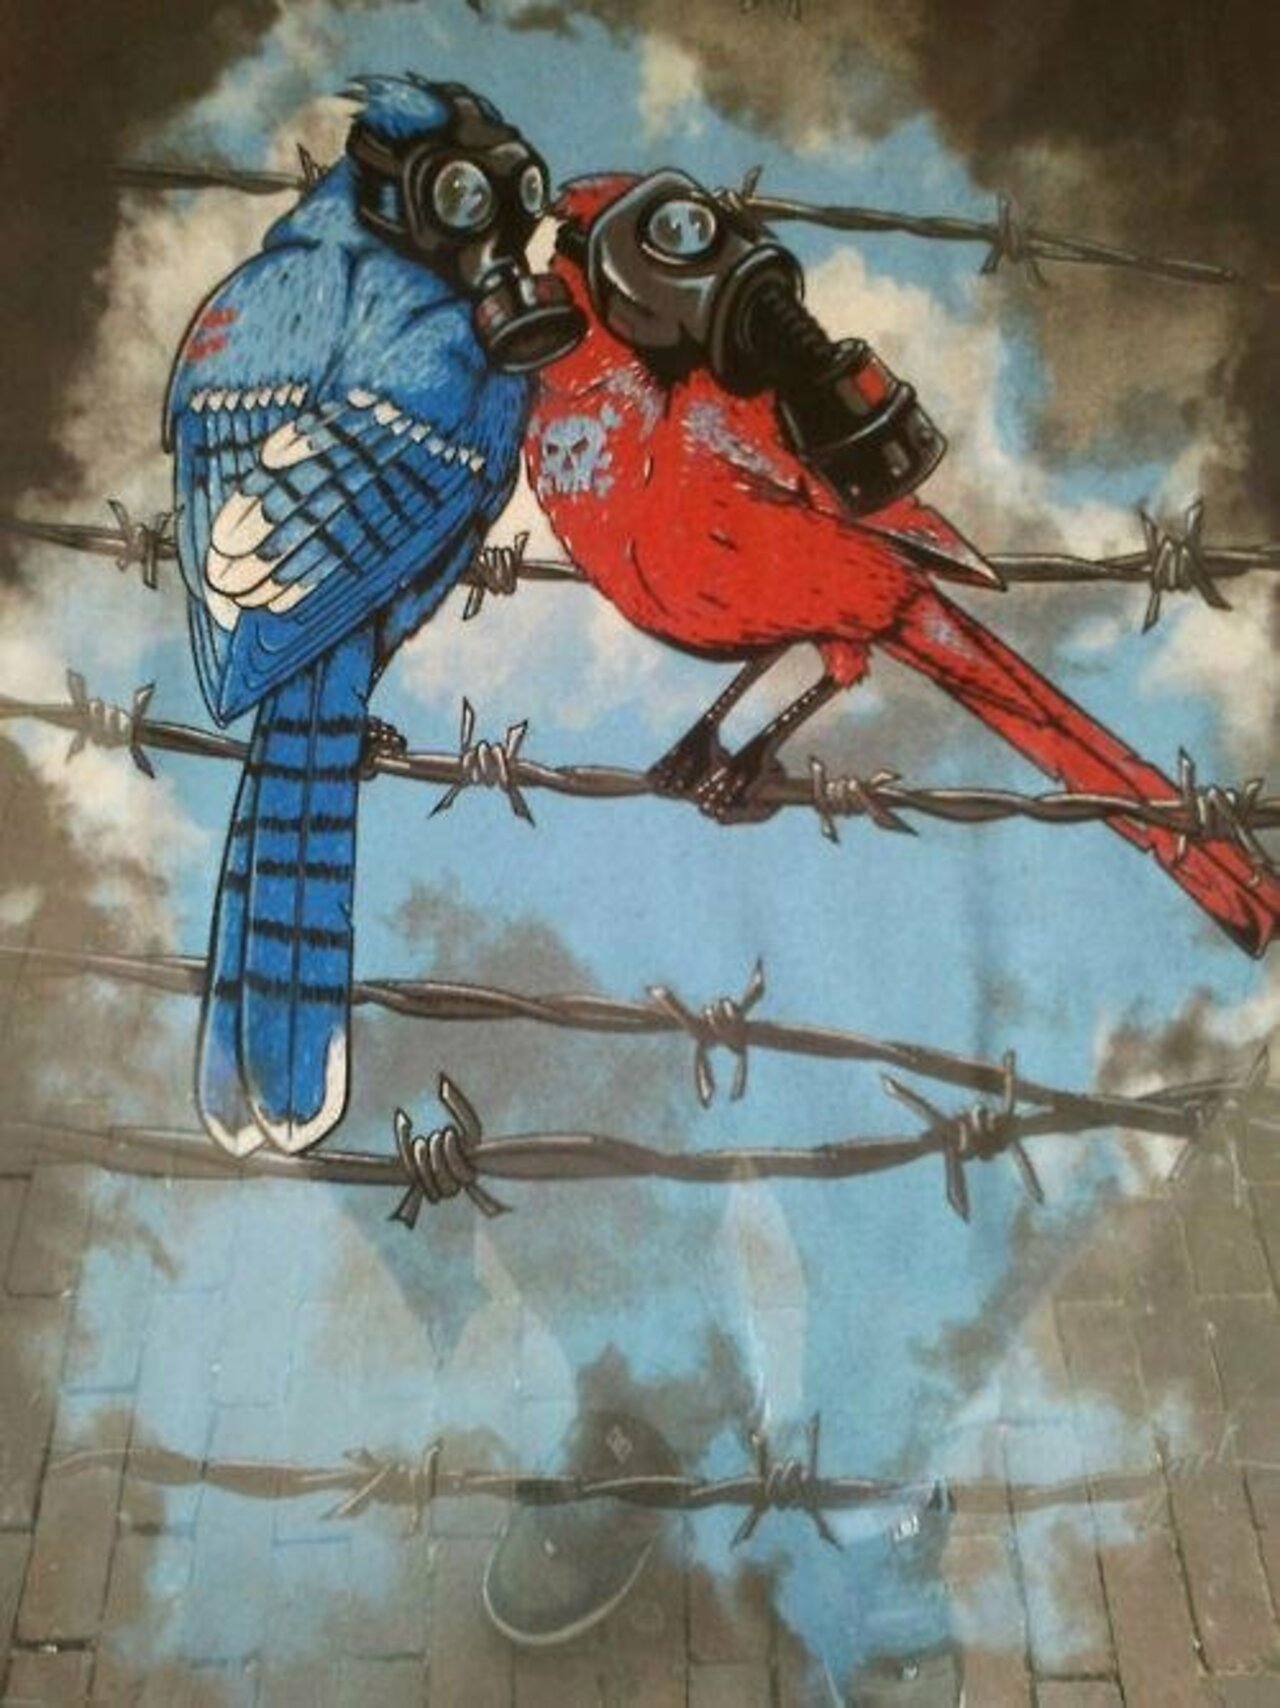 Maxime Archambault"Gaz Birds"#graffiti #mural #streetart https://t.co/vTIOriVoQJ